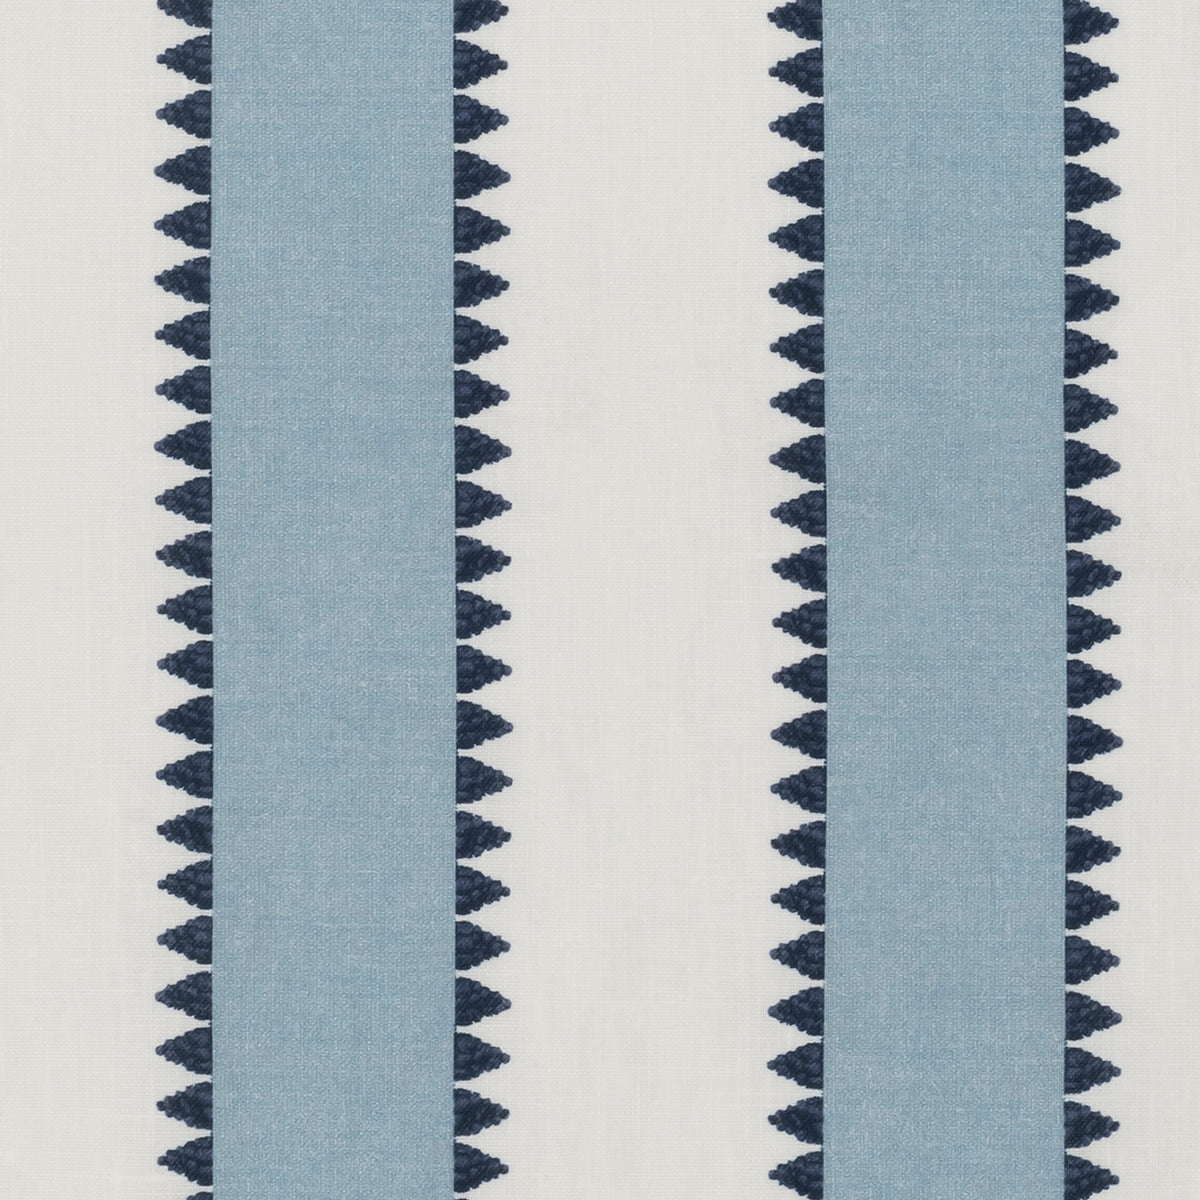 Swatch Sample of Matouk Schumacher Apollo Stripe Table Linens in Sky Color